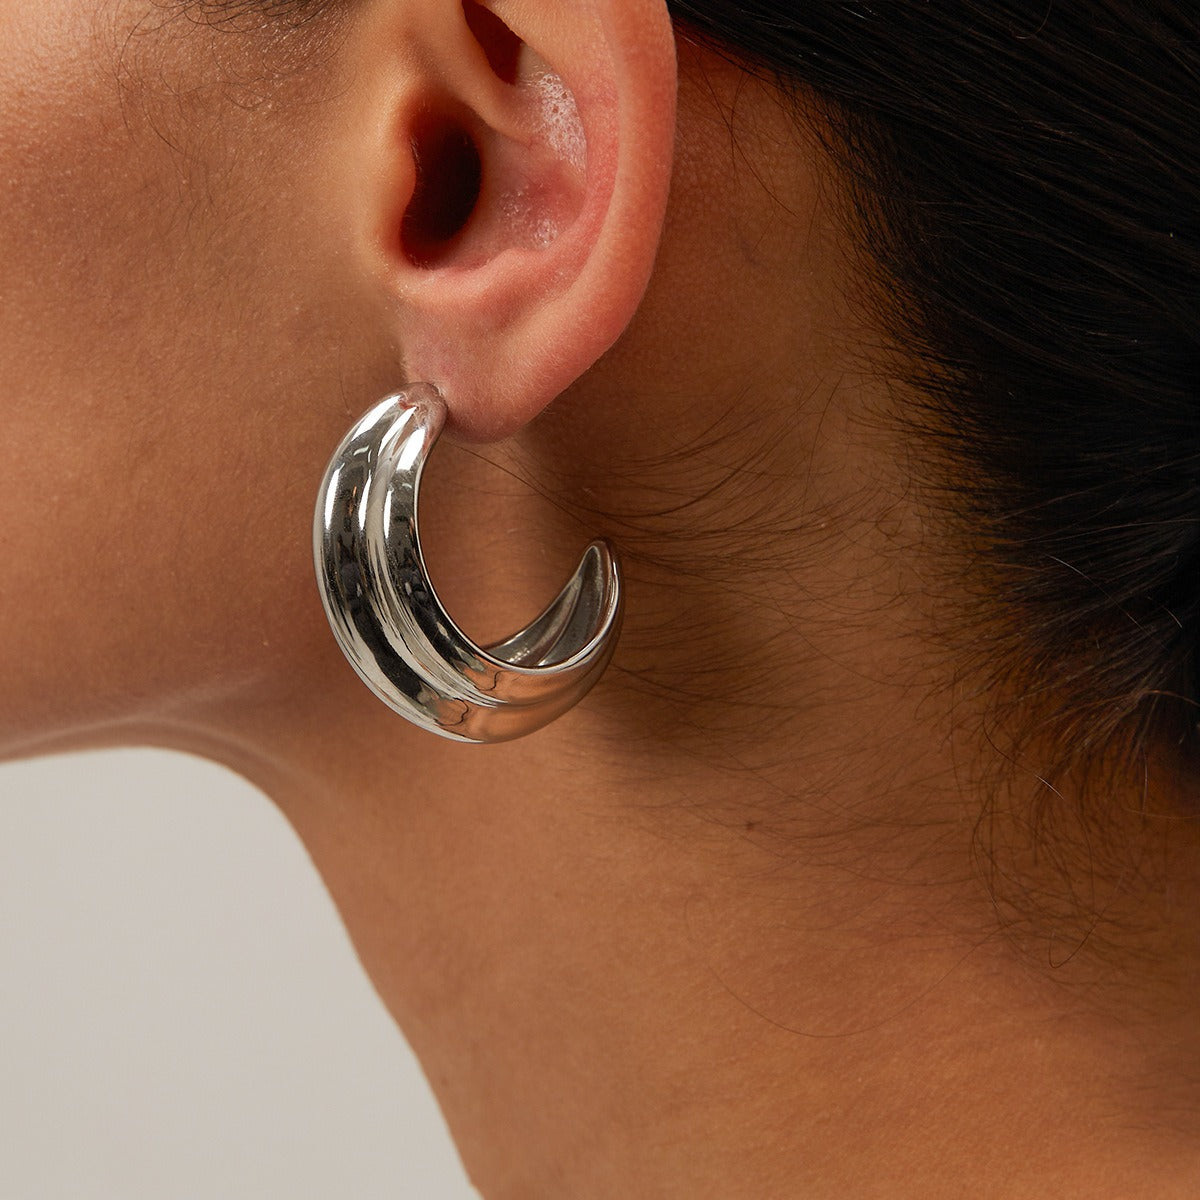 18k gold classic simple C-shaped design earrings